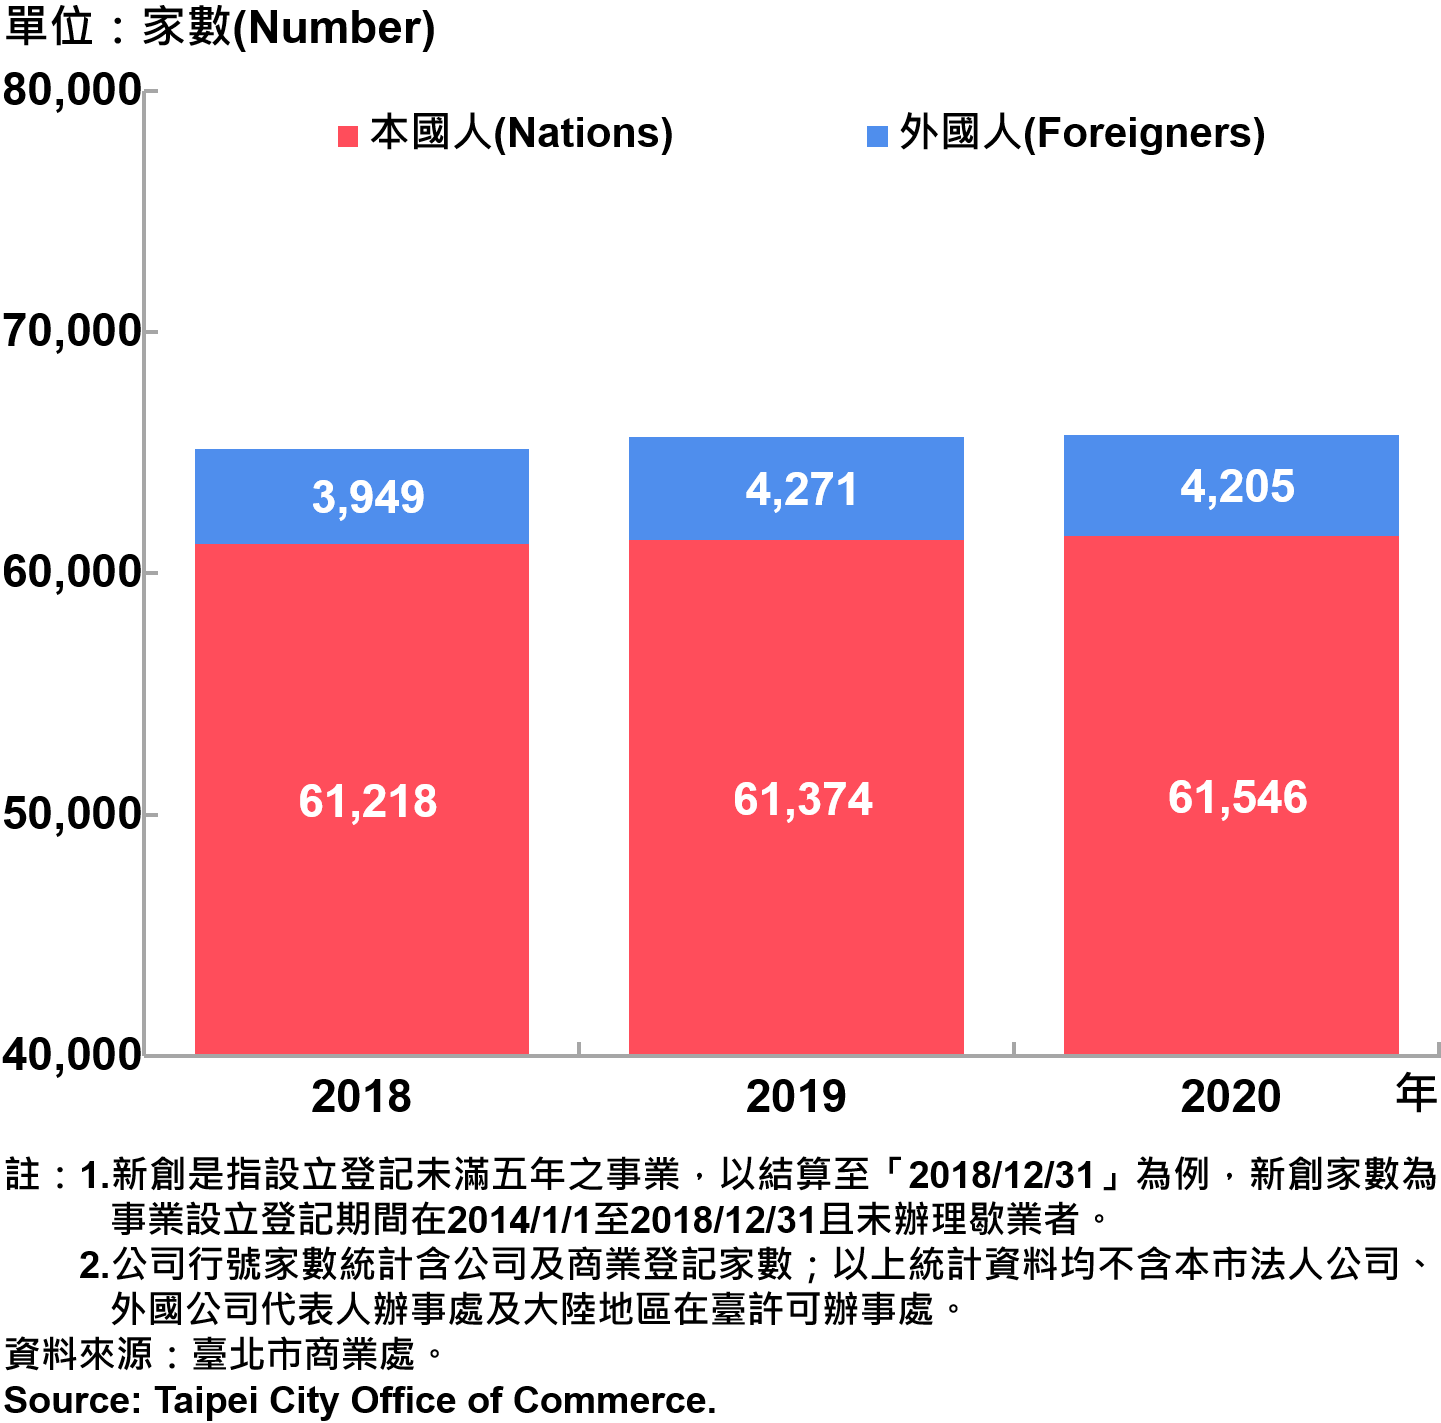 臺北市新創公司行號負責人-本國人與外國人分布情形-現存家數—2020 Responsible Person of Newly Registered Companies In Taipei City by Nationality - Number of Current—2020